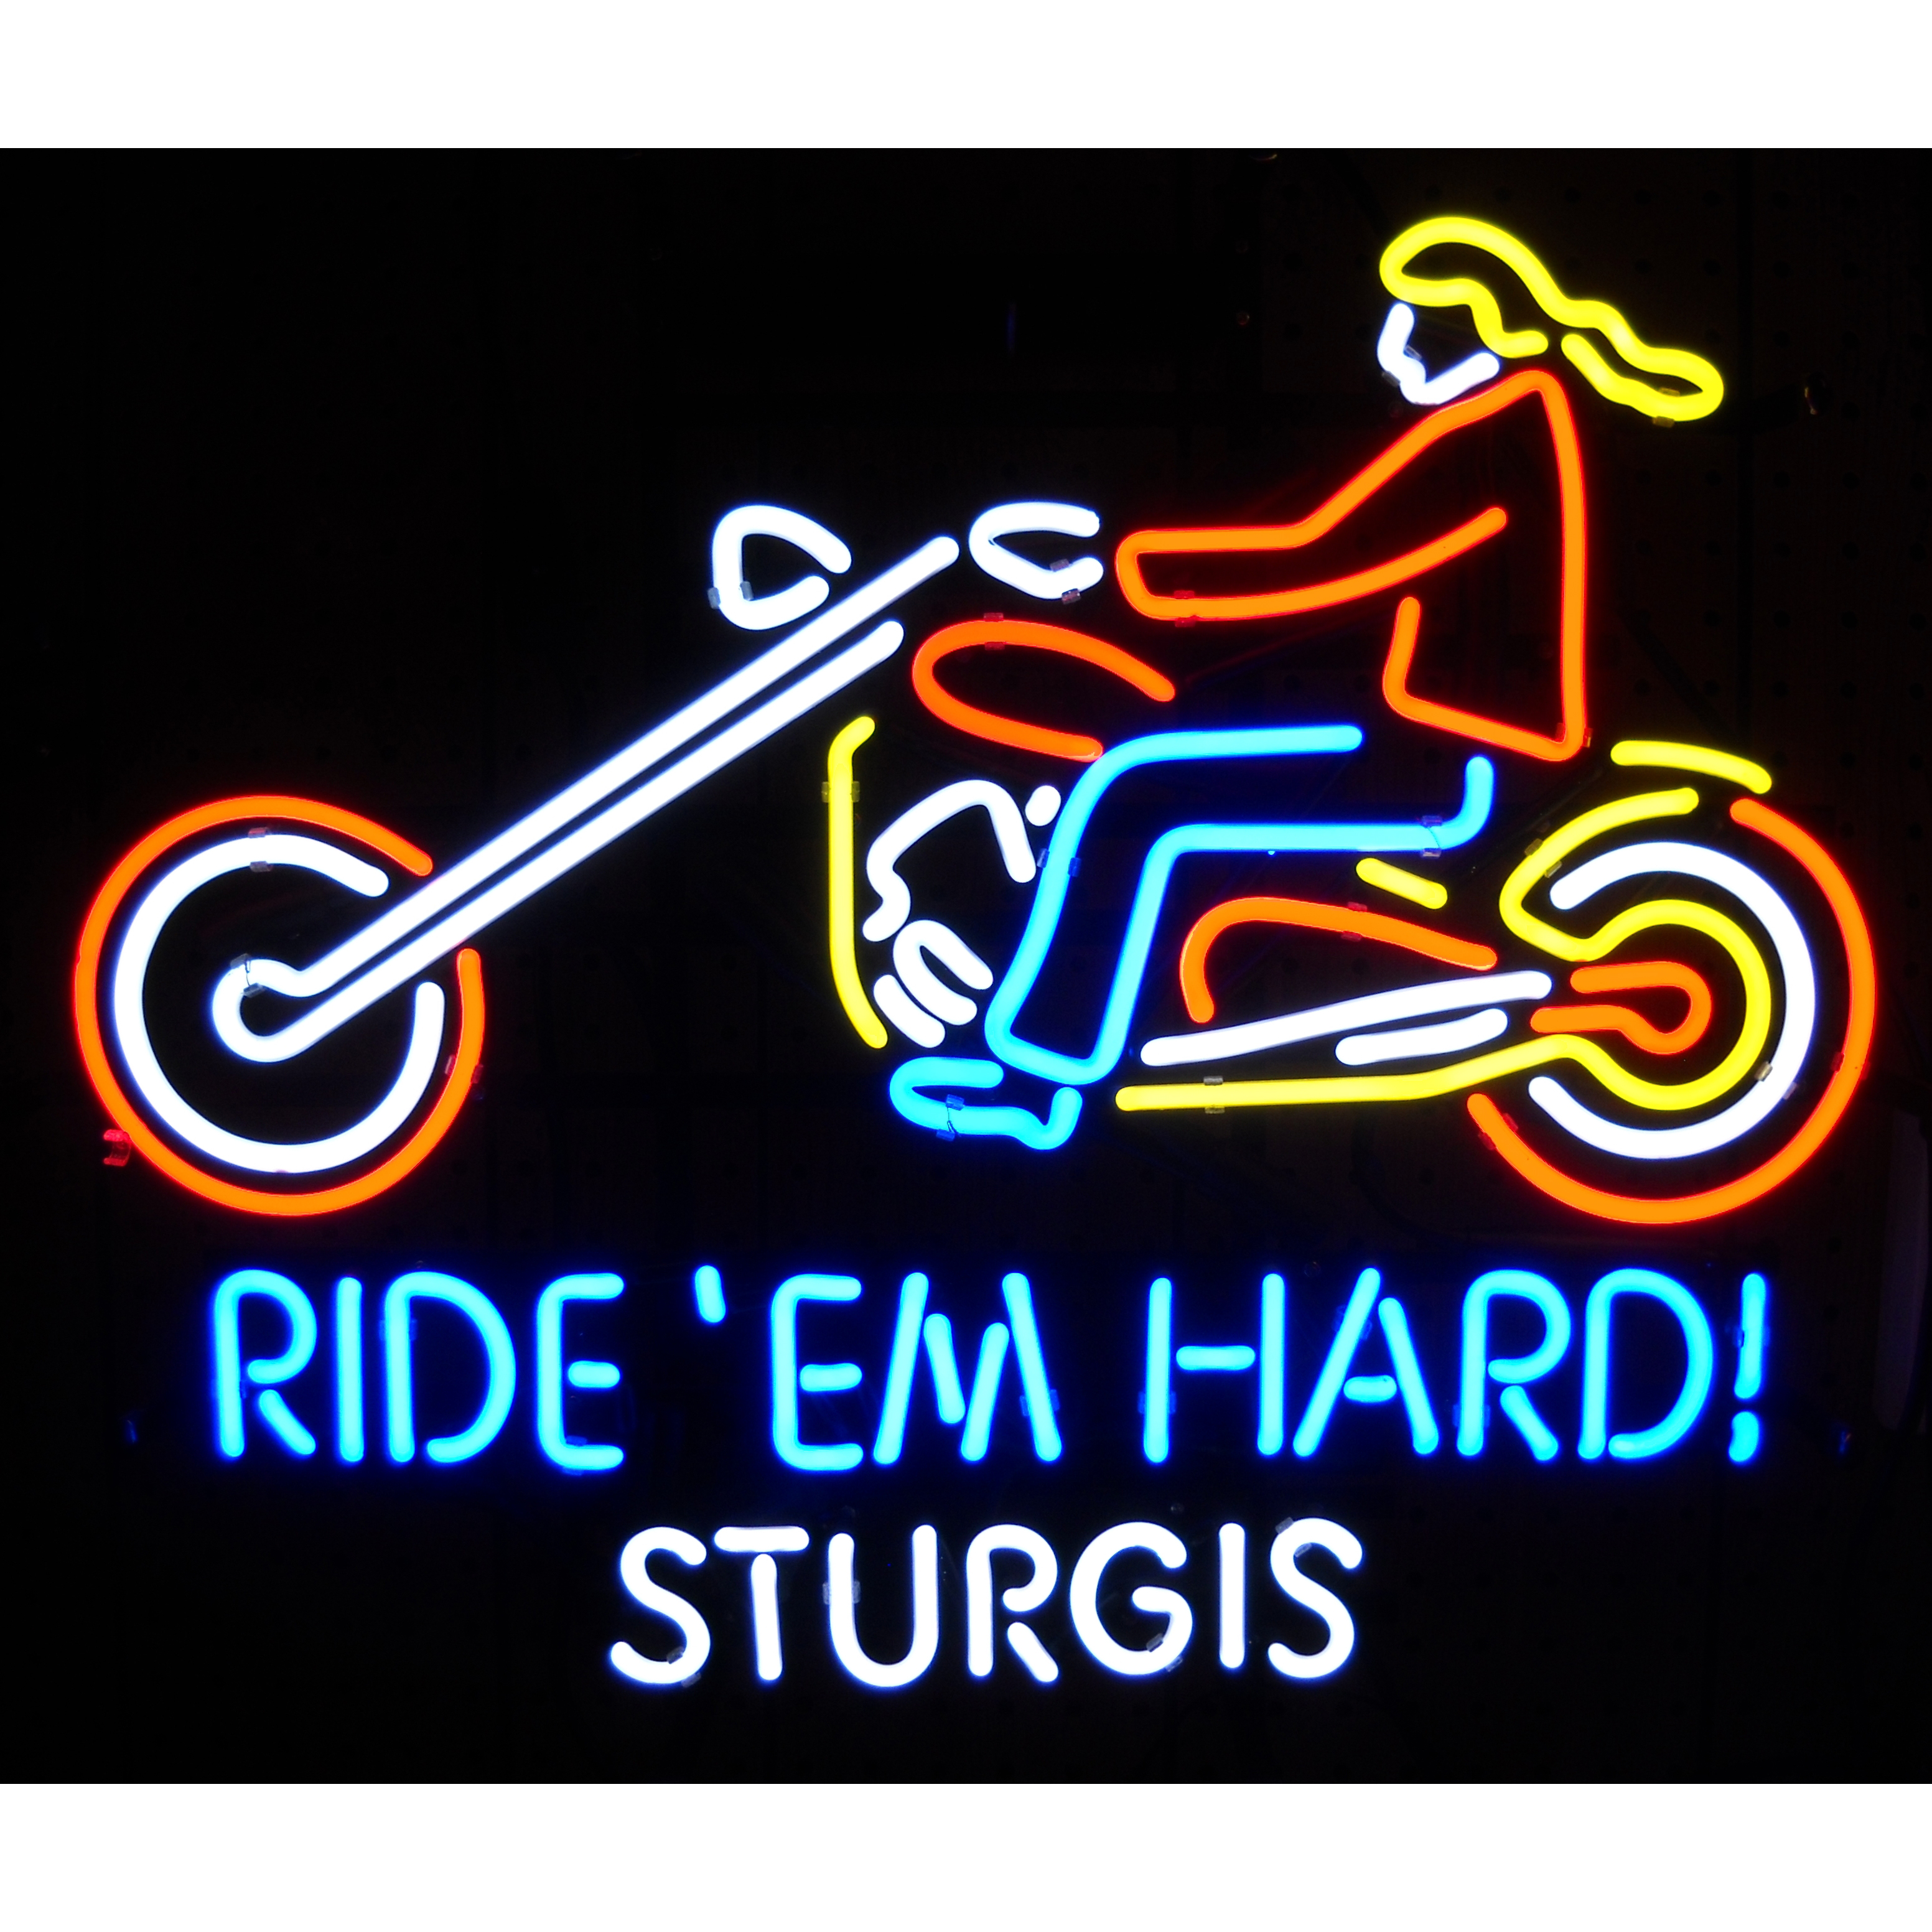 RIDE EM HARD STURGIS MOTOTCYLE NEON SIGN